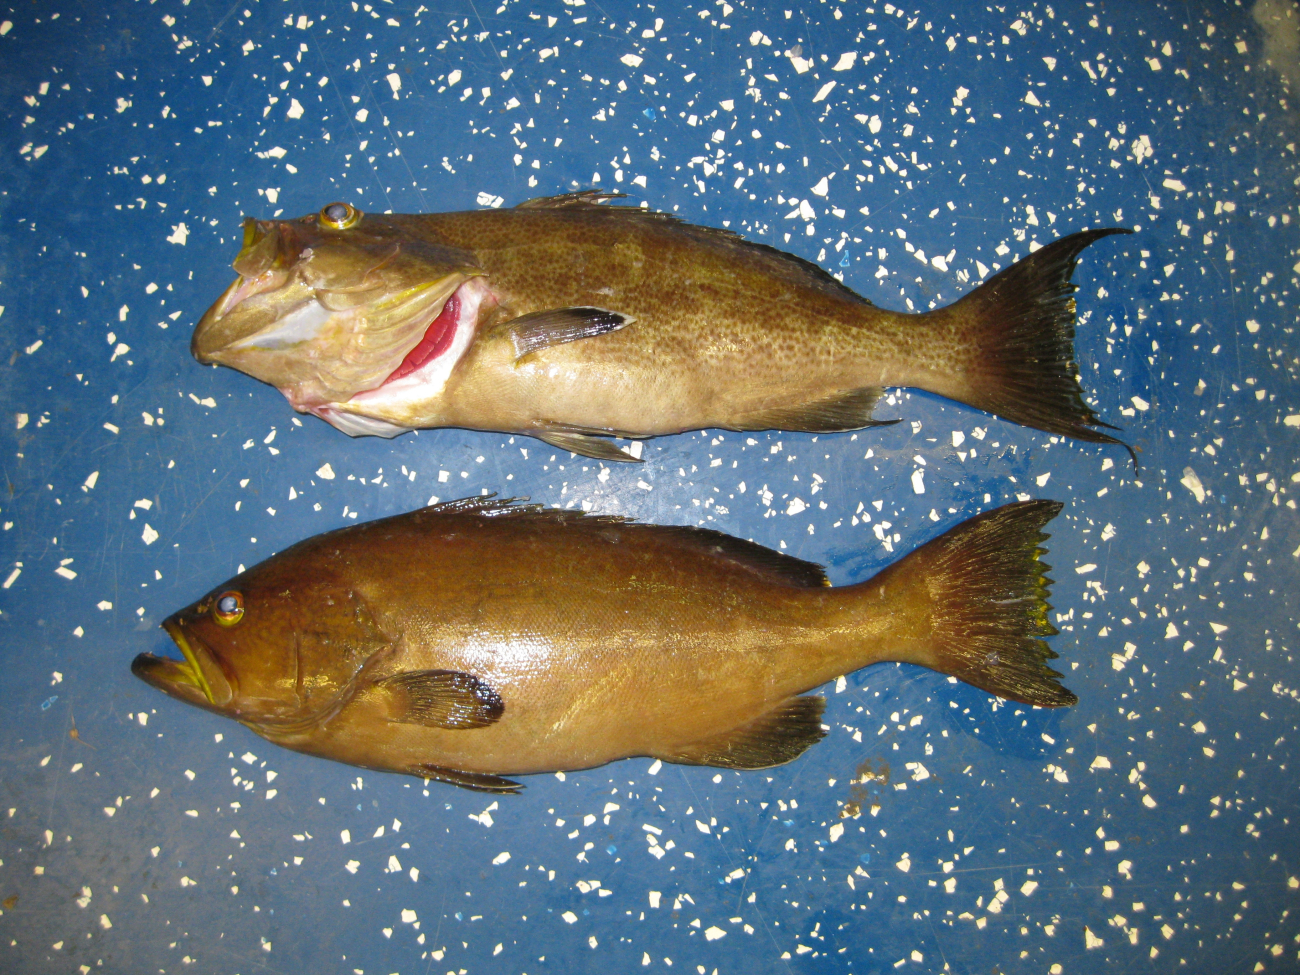 Top - scamp grouper (Mycteroperca phenax)